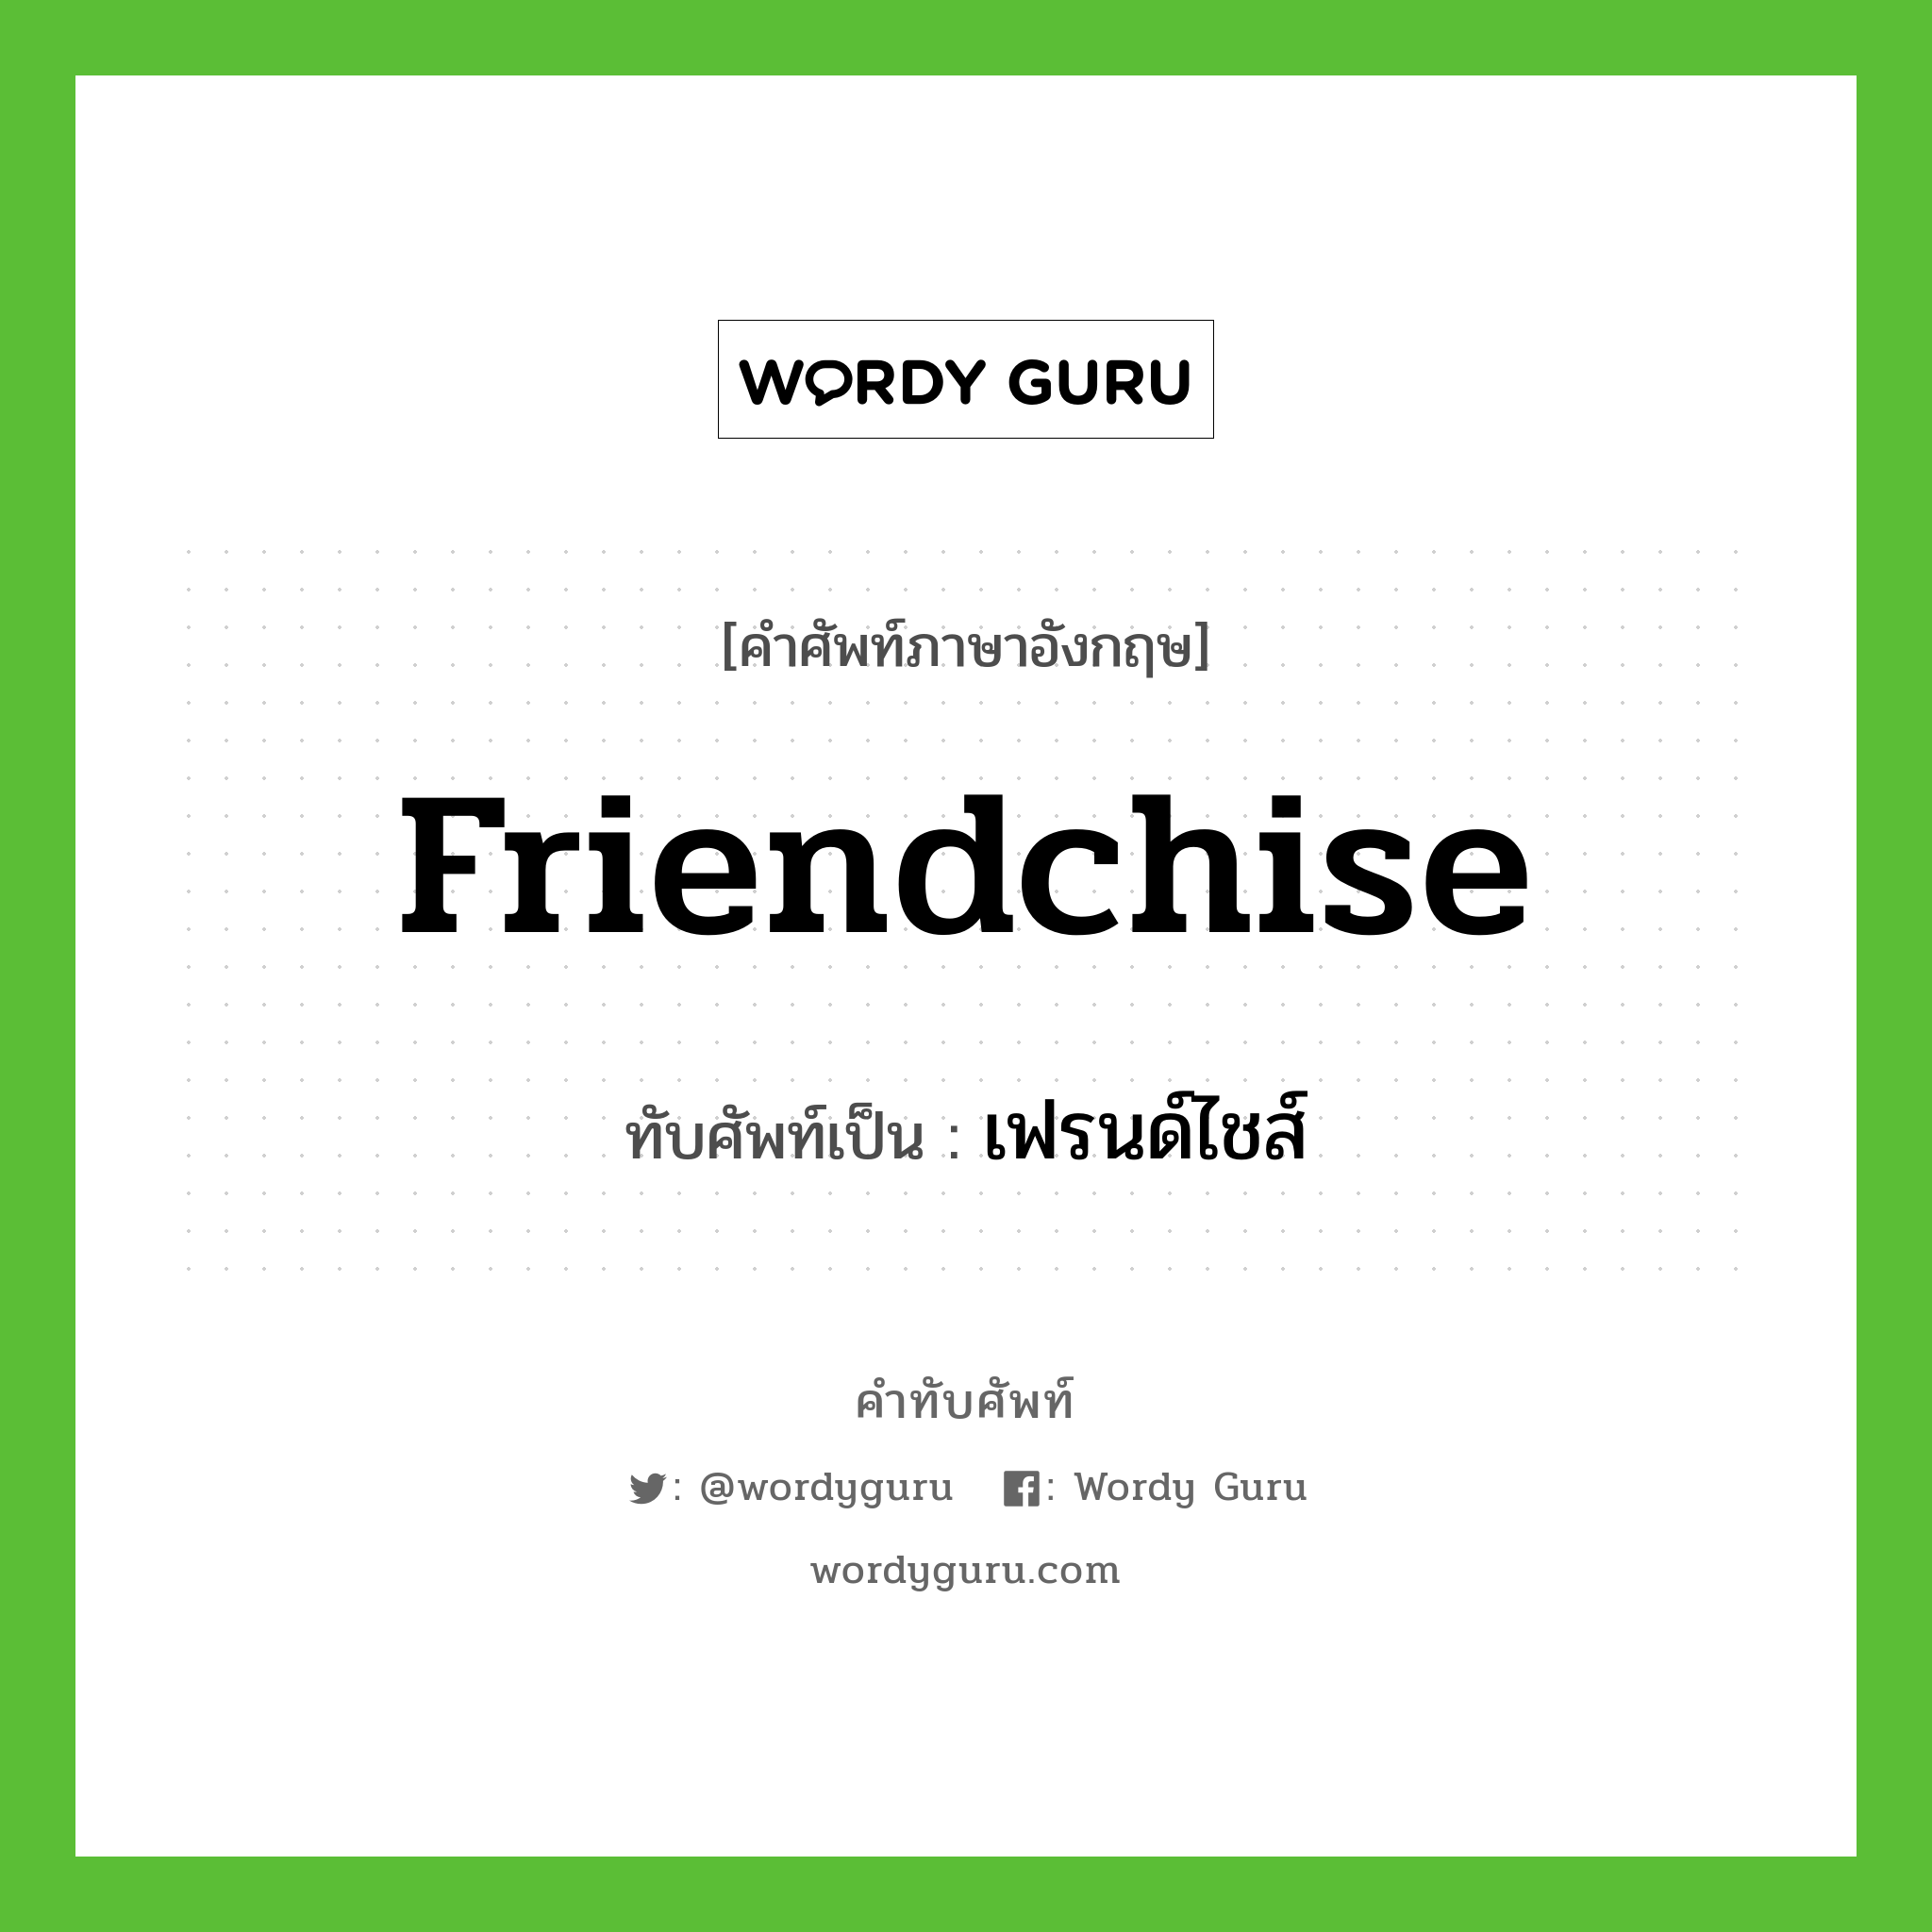 friendchise เขียนเป็นคำไทยว่าอะไร?, คำศัพท์ภาษาอังกฤษ friendchise ทับศัพท์เป็น เฟรนด์ไชส์